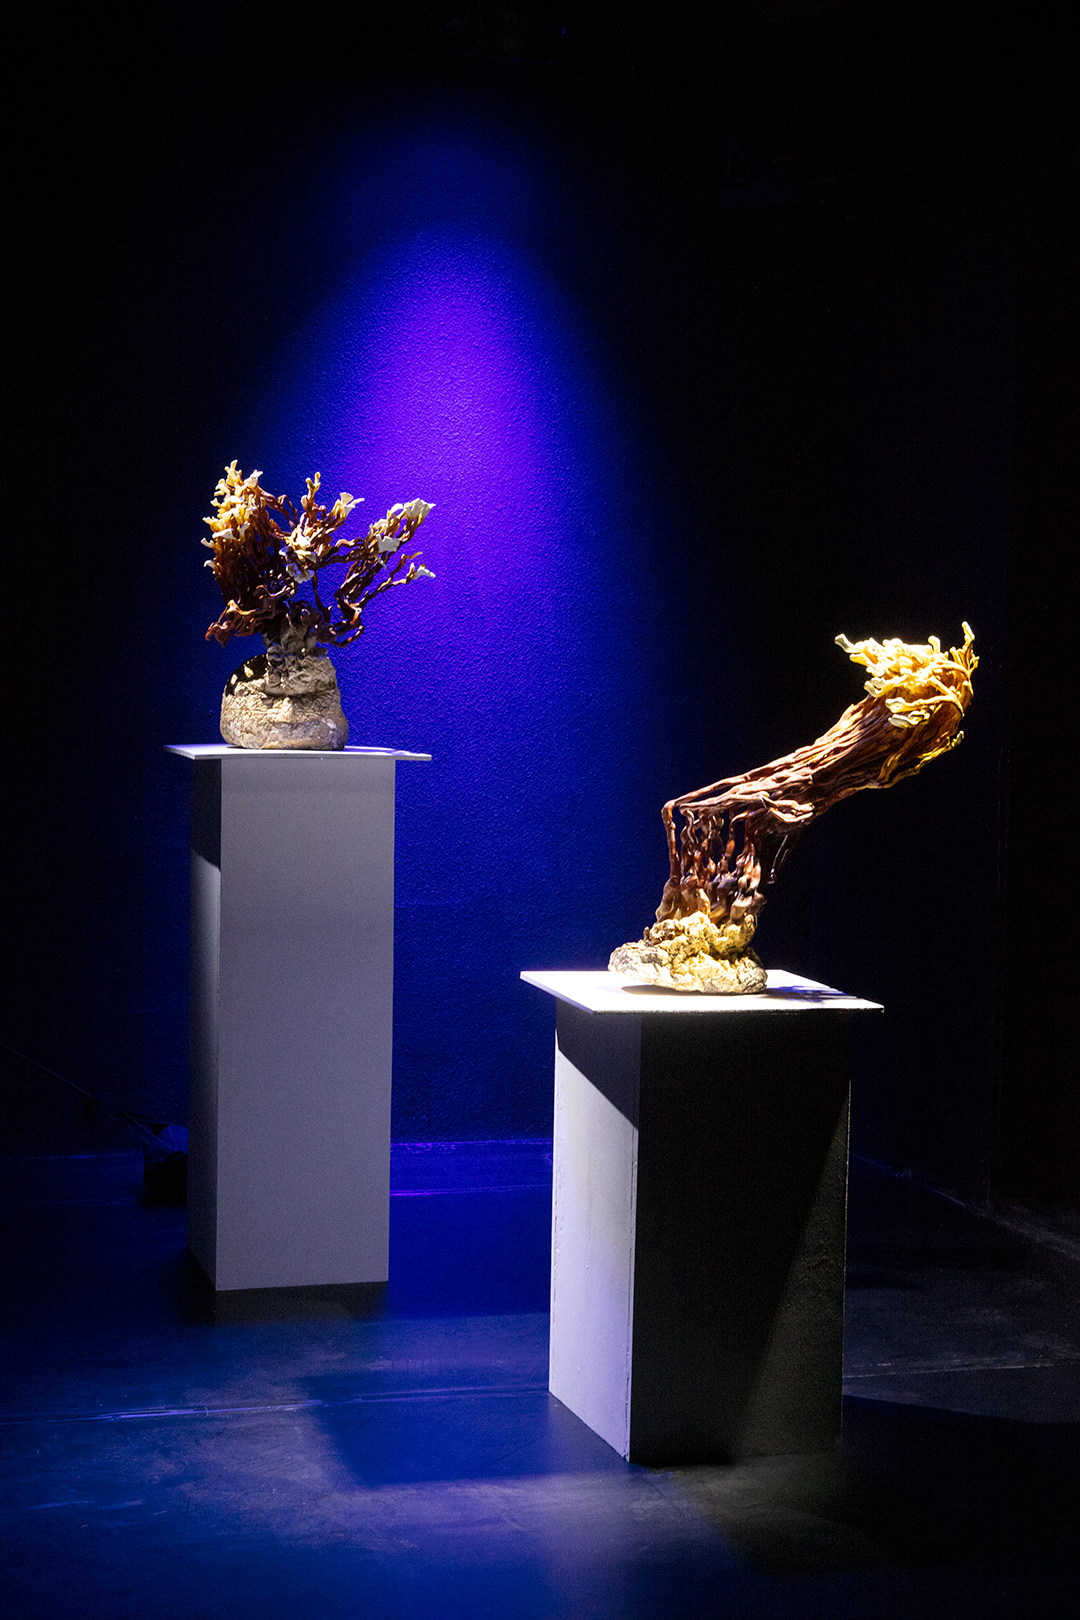 Installation shot of two mushroom specemins on white pedestals under dramatic spotlights